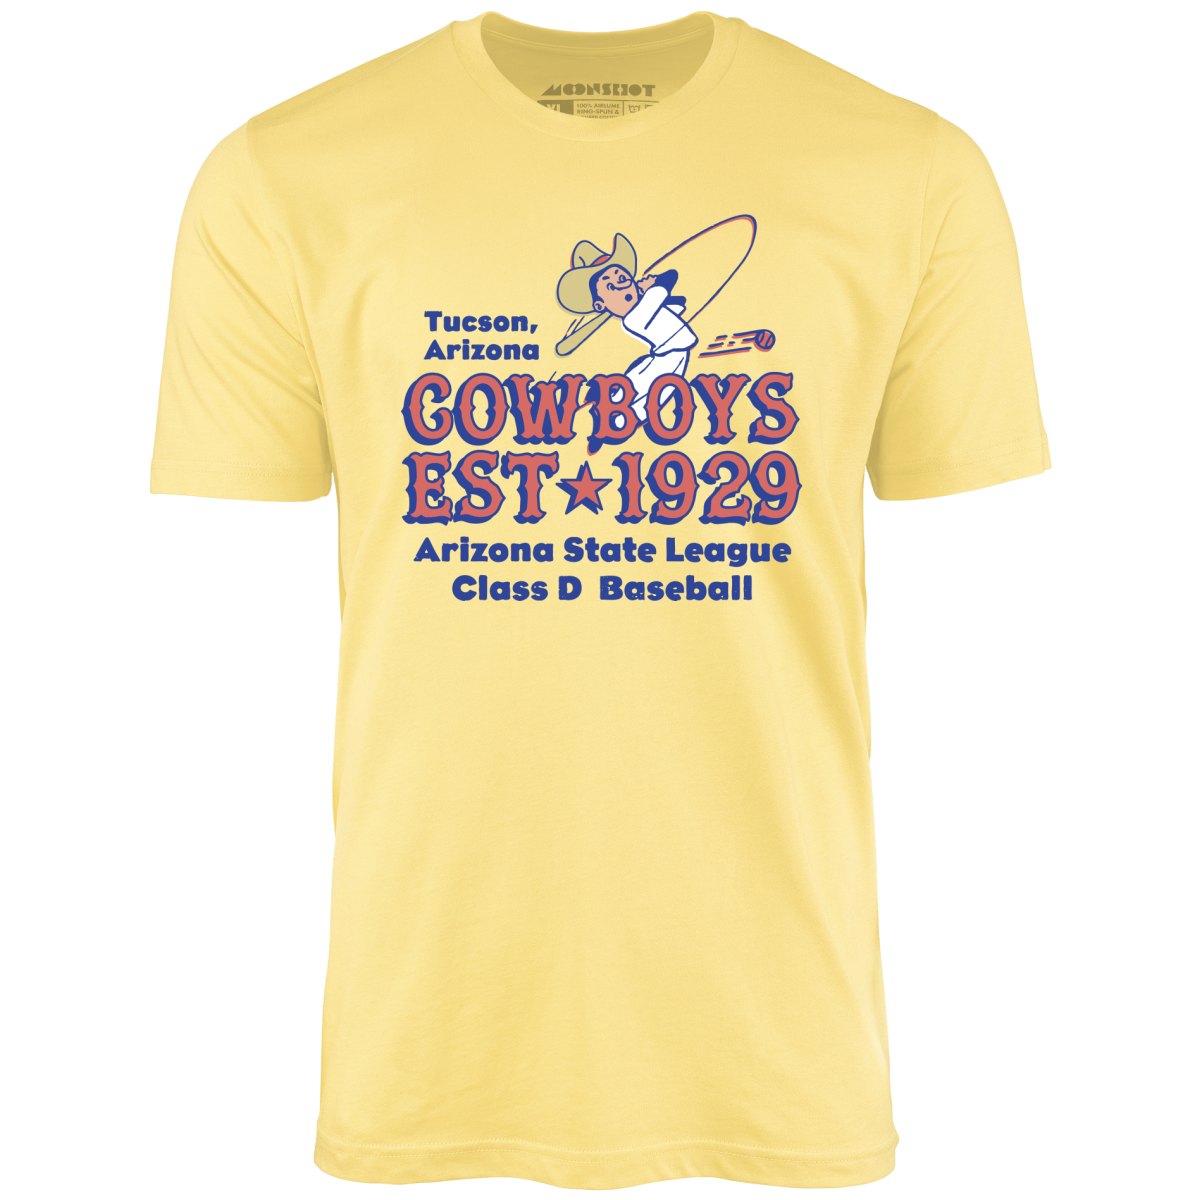 Tucson Cowboys - Arizona - Vintage Defunct Baseball Teams - Unisex T-Shirt